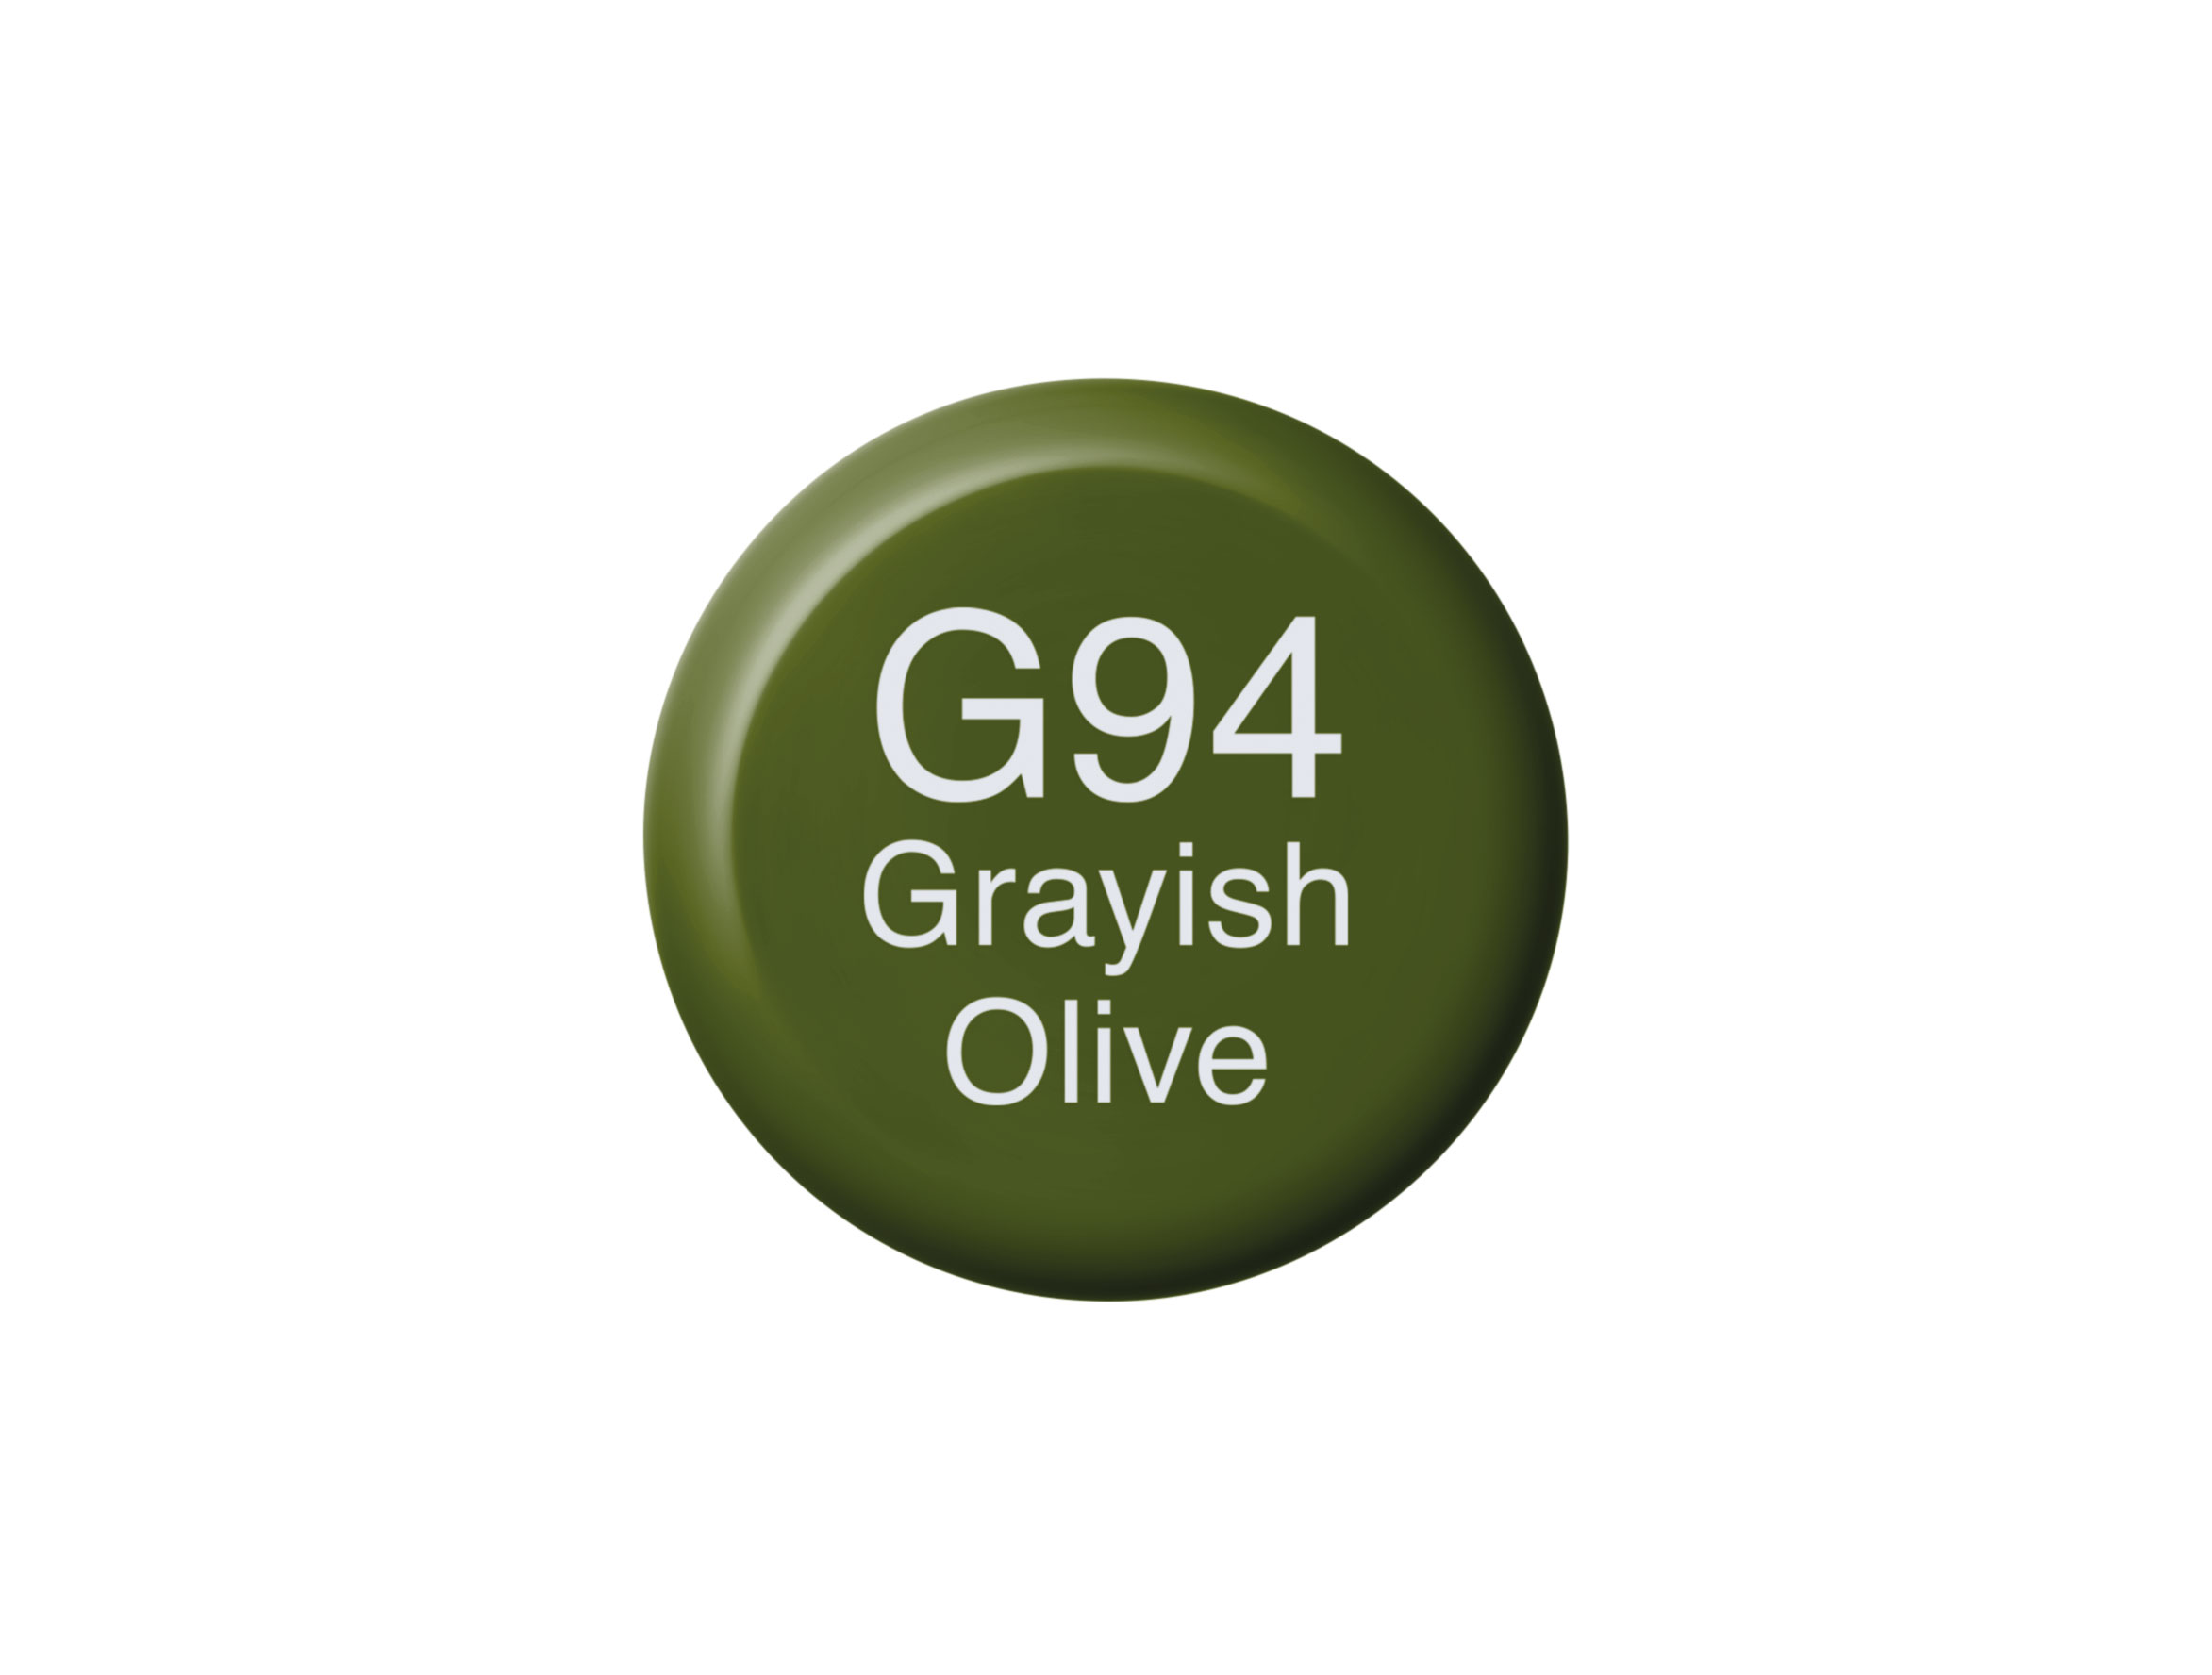 Copic Ink G94 Grayish Olive